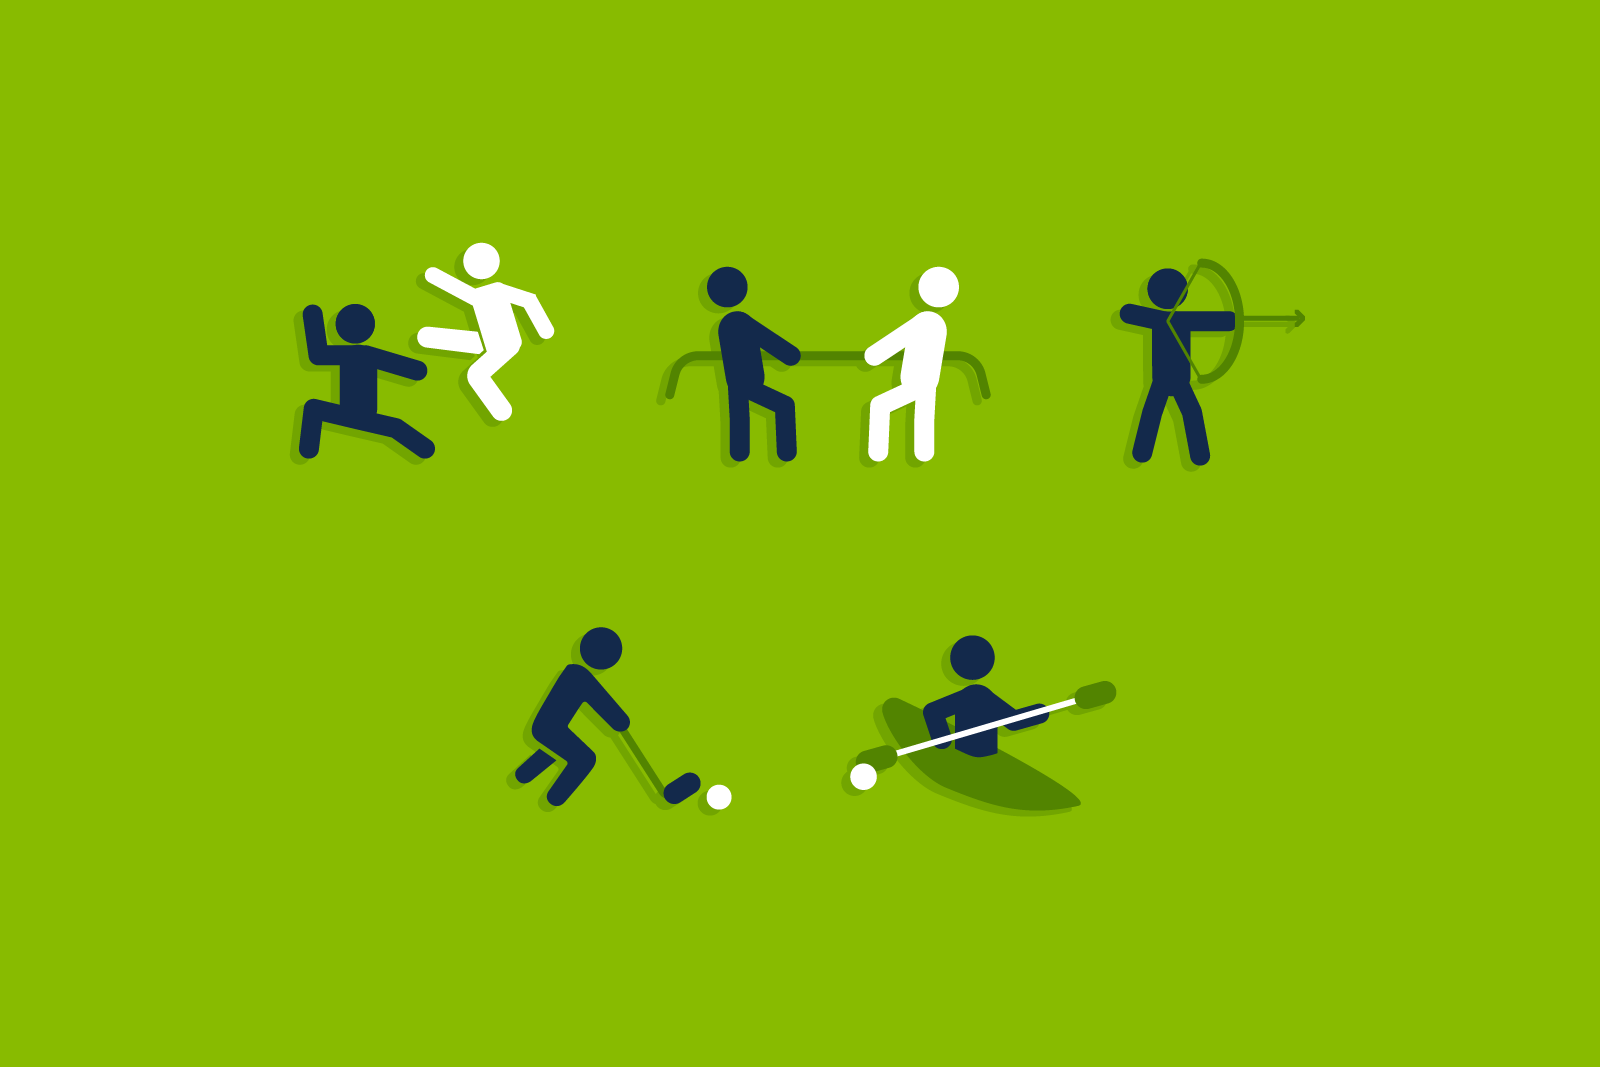 Stick figure icons representing, Wushu, Tug of War, Archery, Floorball,...